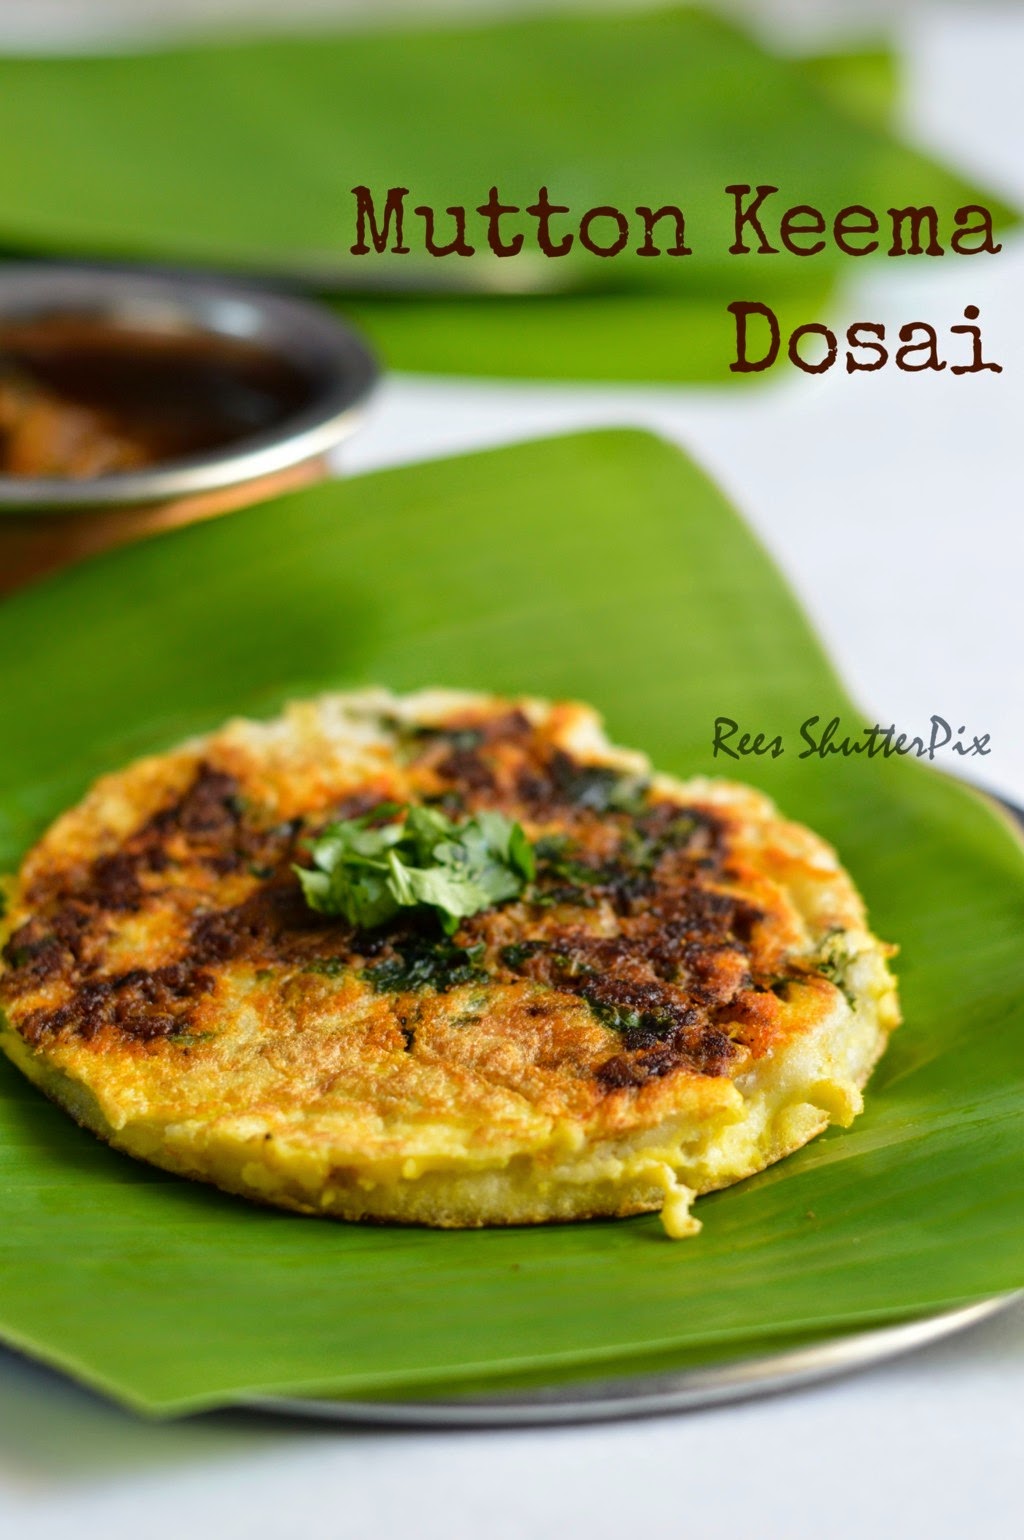 Madurai Famous Recipes, Roadside Foods, madurai kari dosa, kari dosai recipe in tamil, kari dosa madurai style, roadside kari dosa recipe, step wise pictures